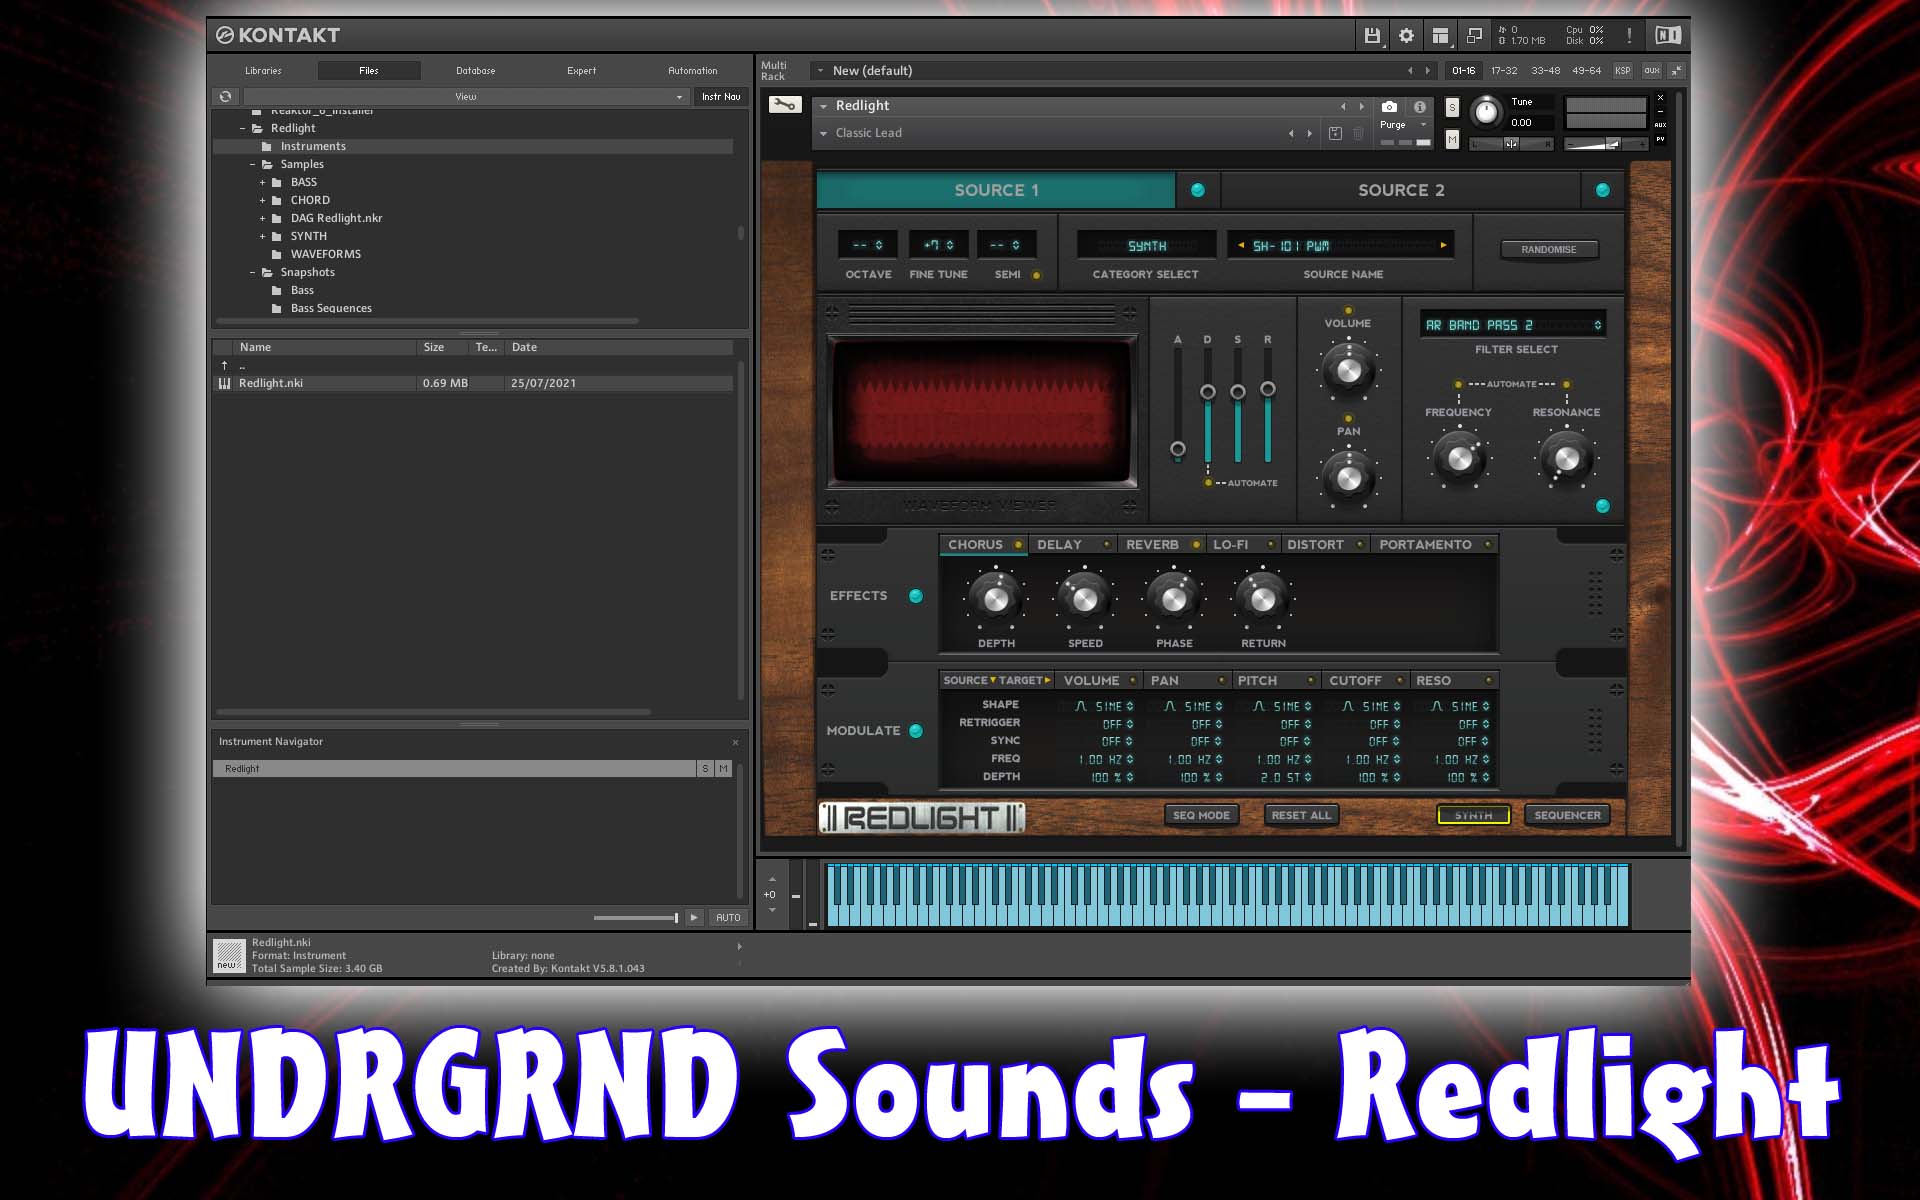 UNDRGRND Sounds - Redlight